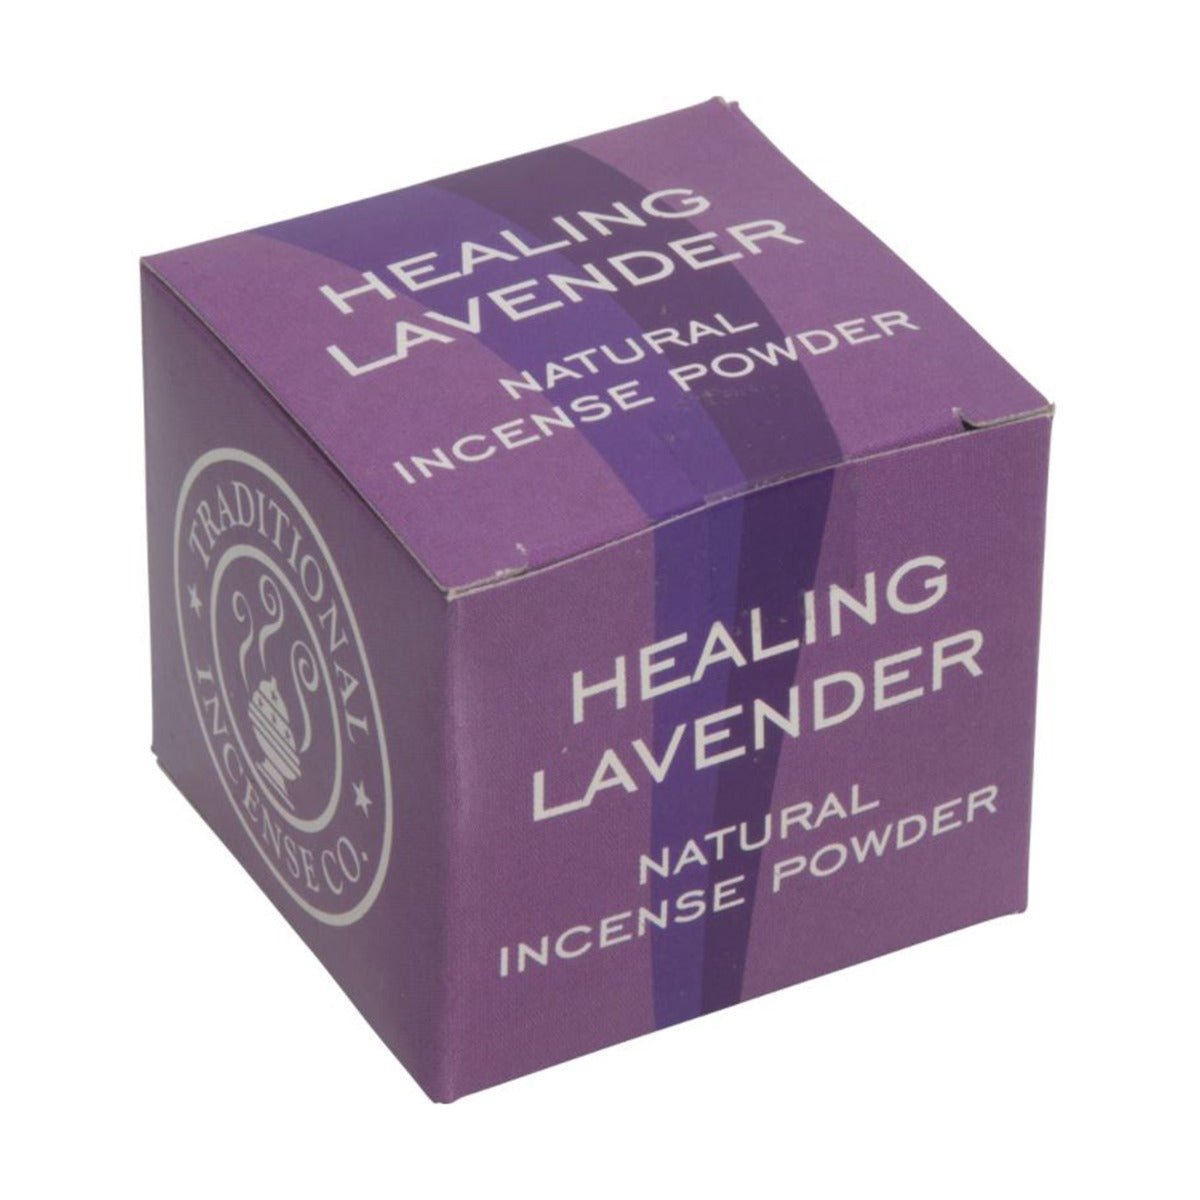 Healing Lavender Powder Incense - 13 Moons